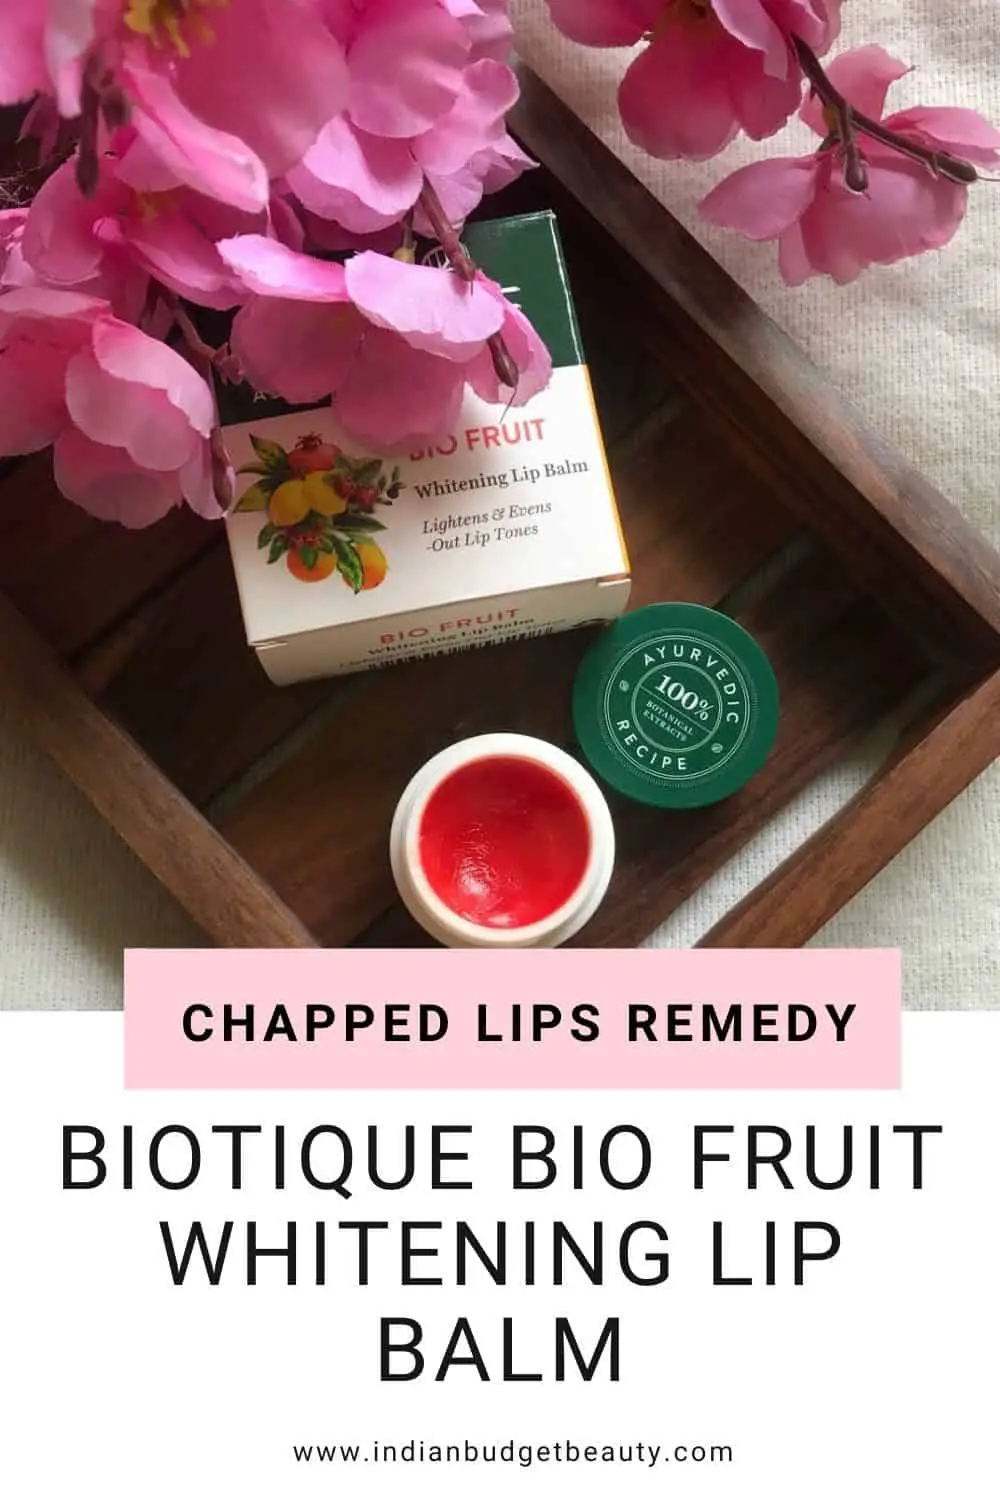 Biotique Bio Fruit Whitening Lip Balm Review | Chapped Lips Remedy